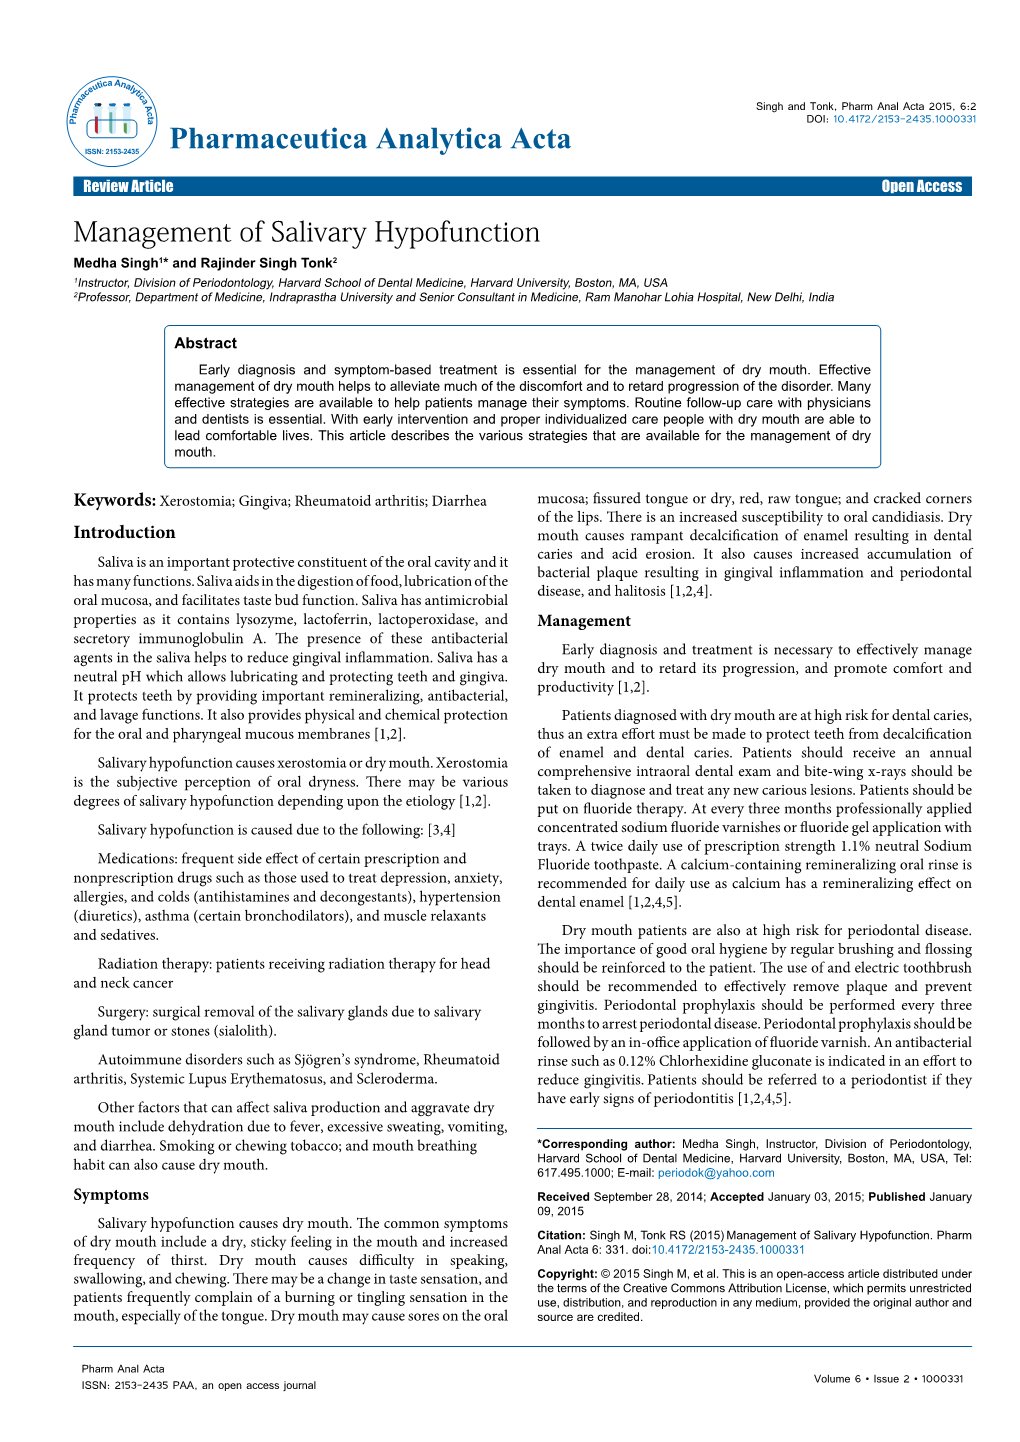 Management of Salivary Hypofunction